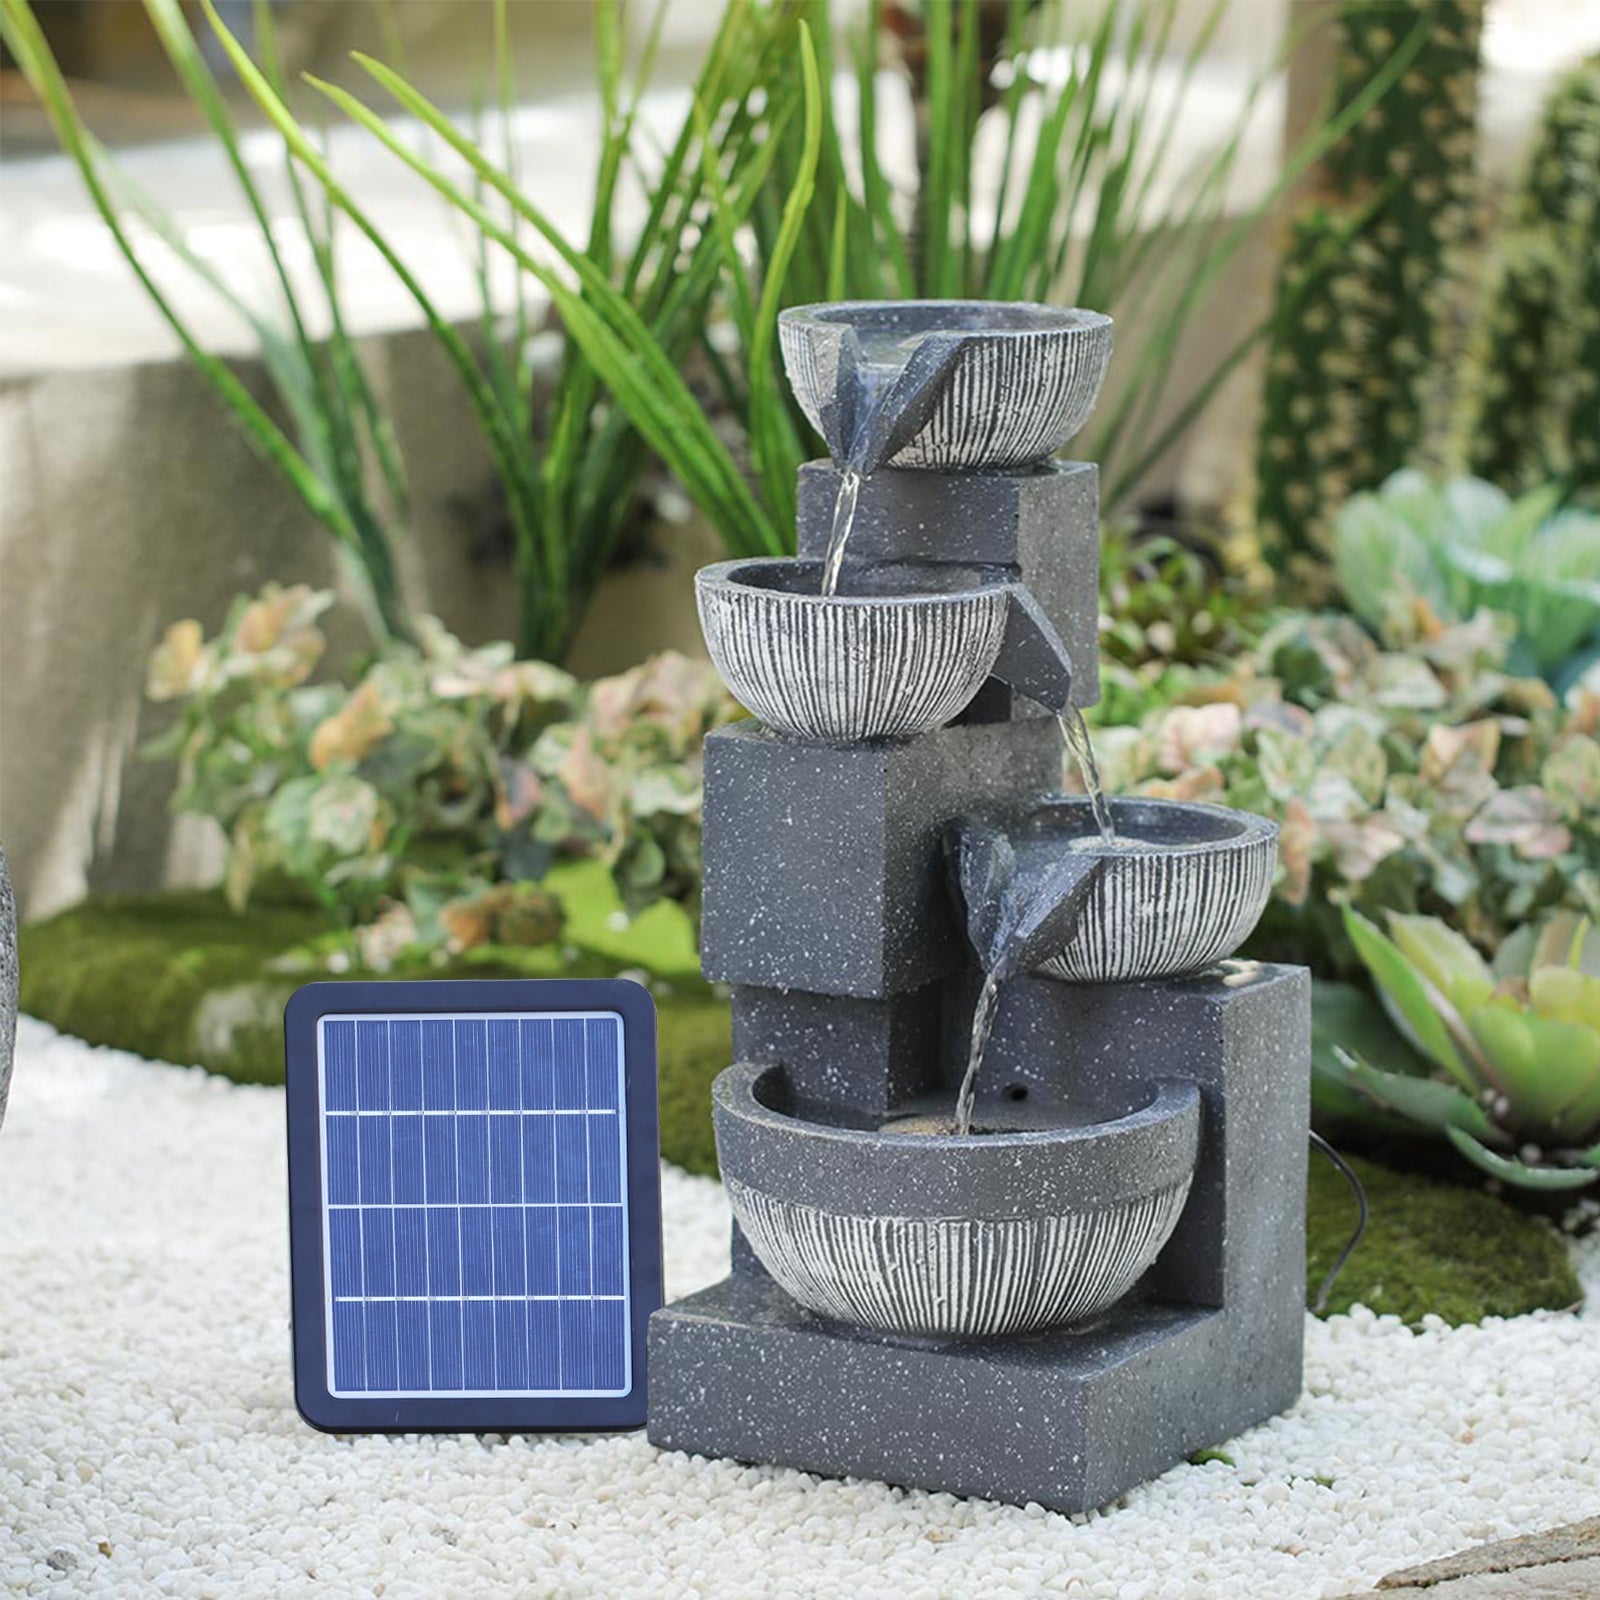 4-Tierd Solar Powered Garden Cascading Fountain with LED Lights Rockery Decorated